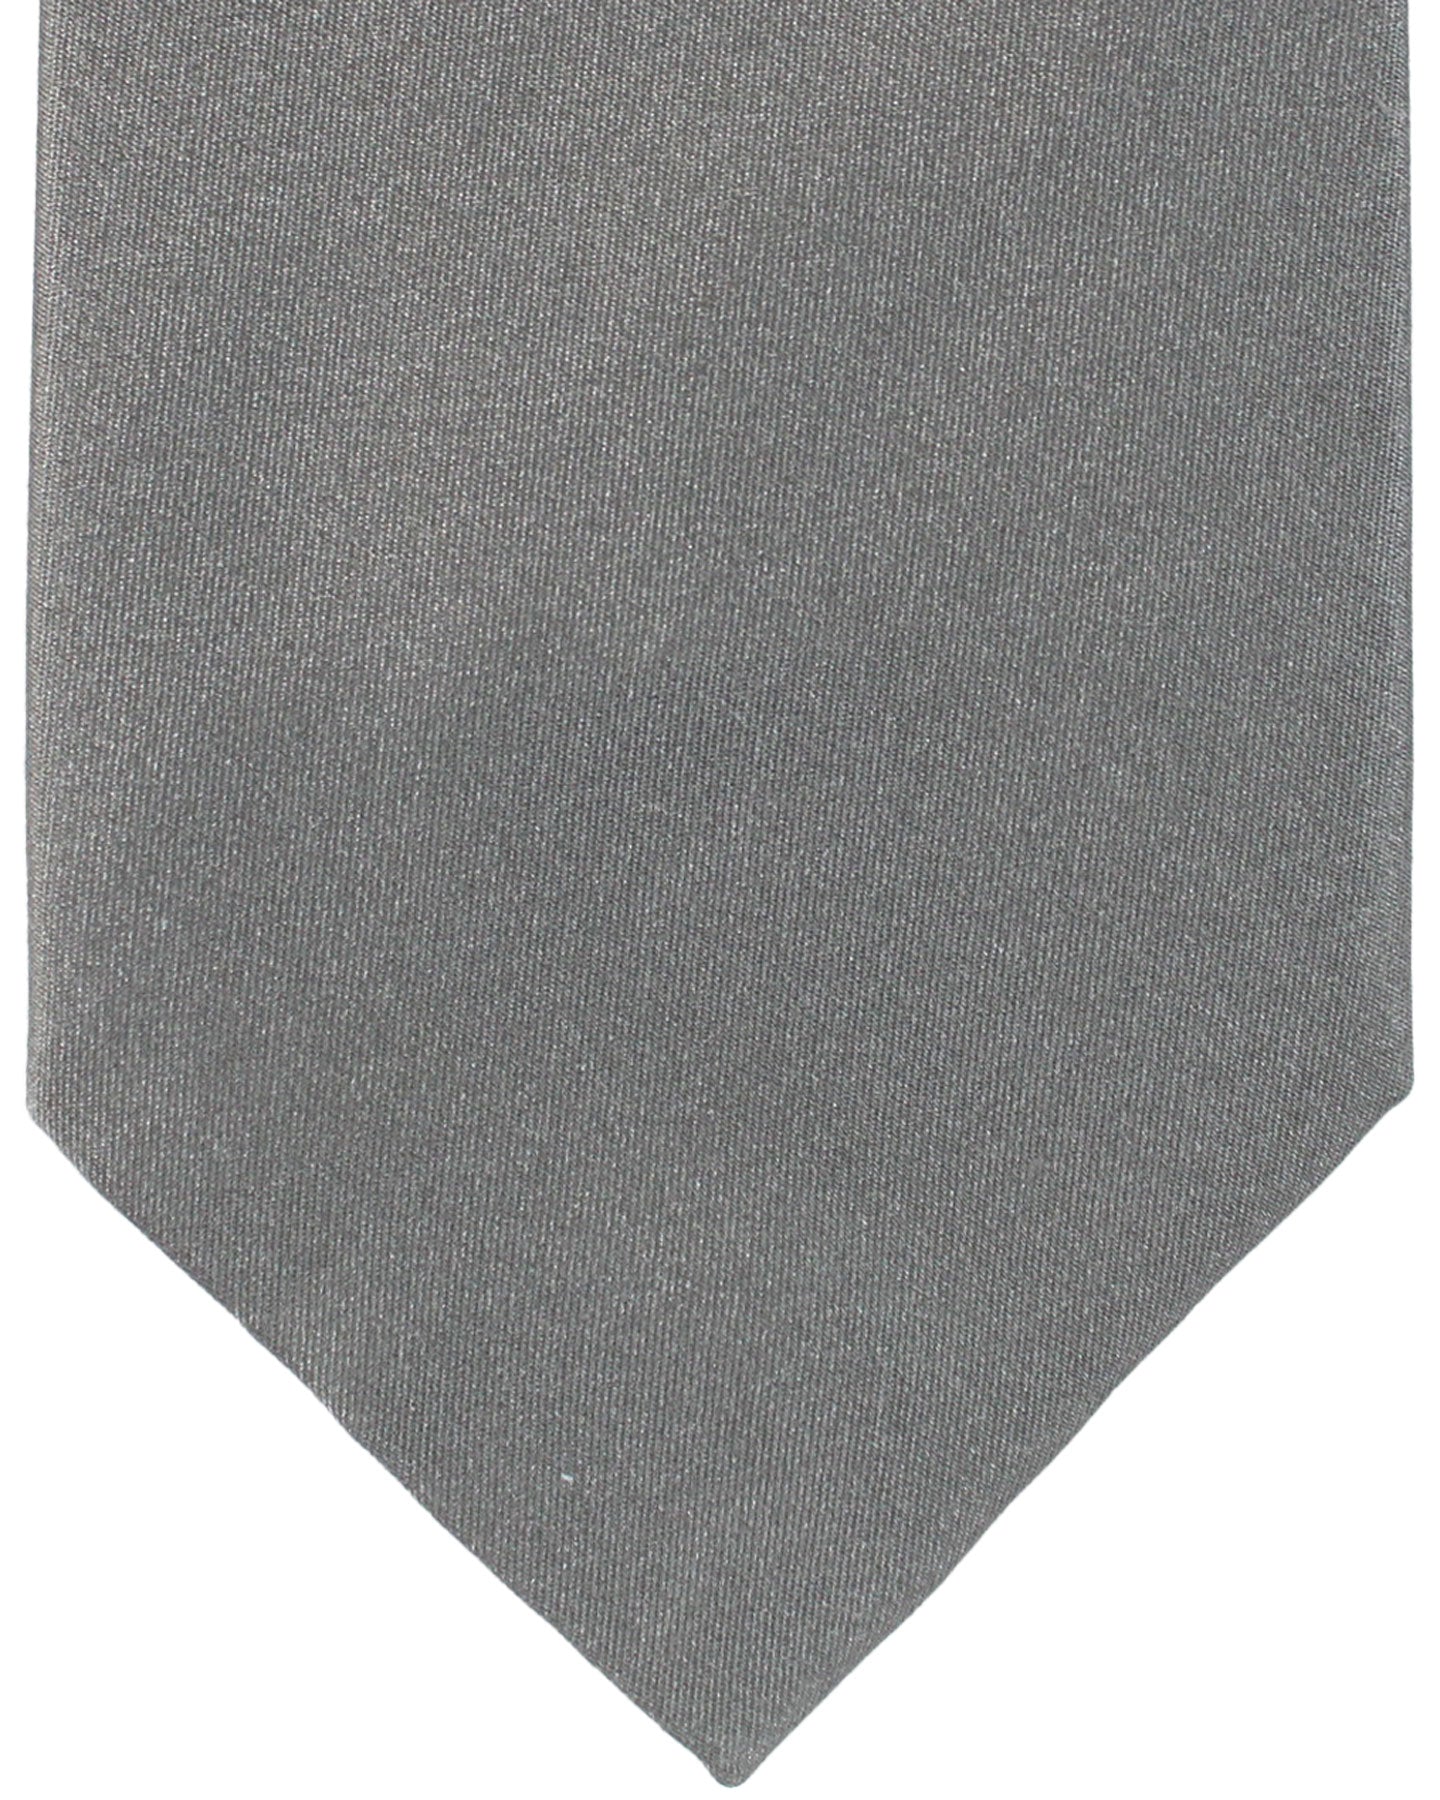 Zilli Silk Sevenfold Tie Charcoal Gray Solid